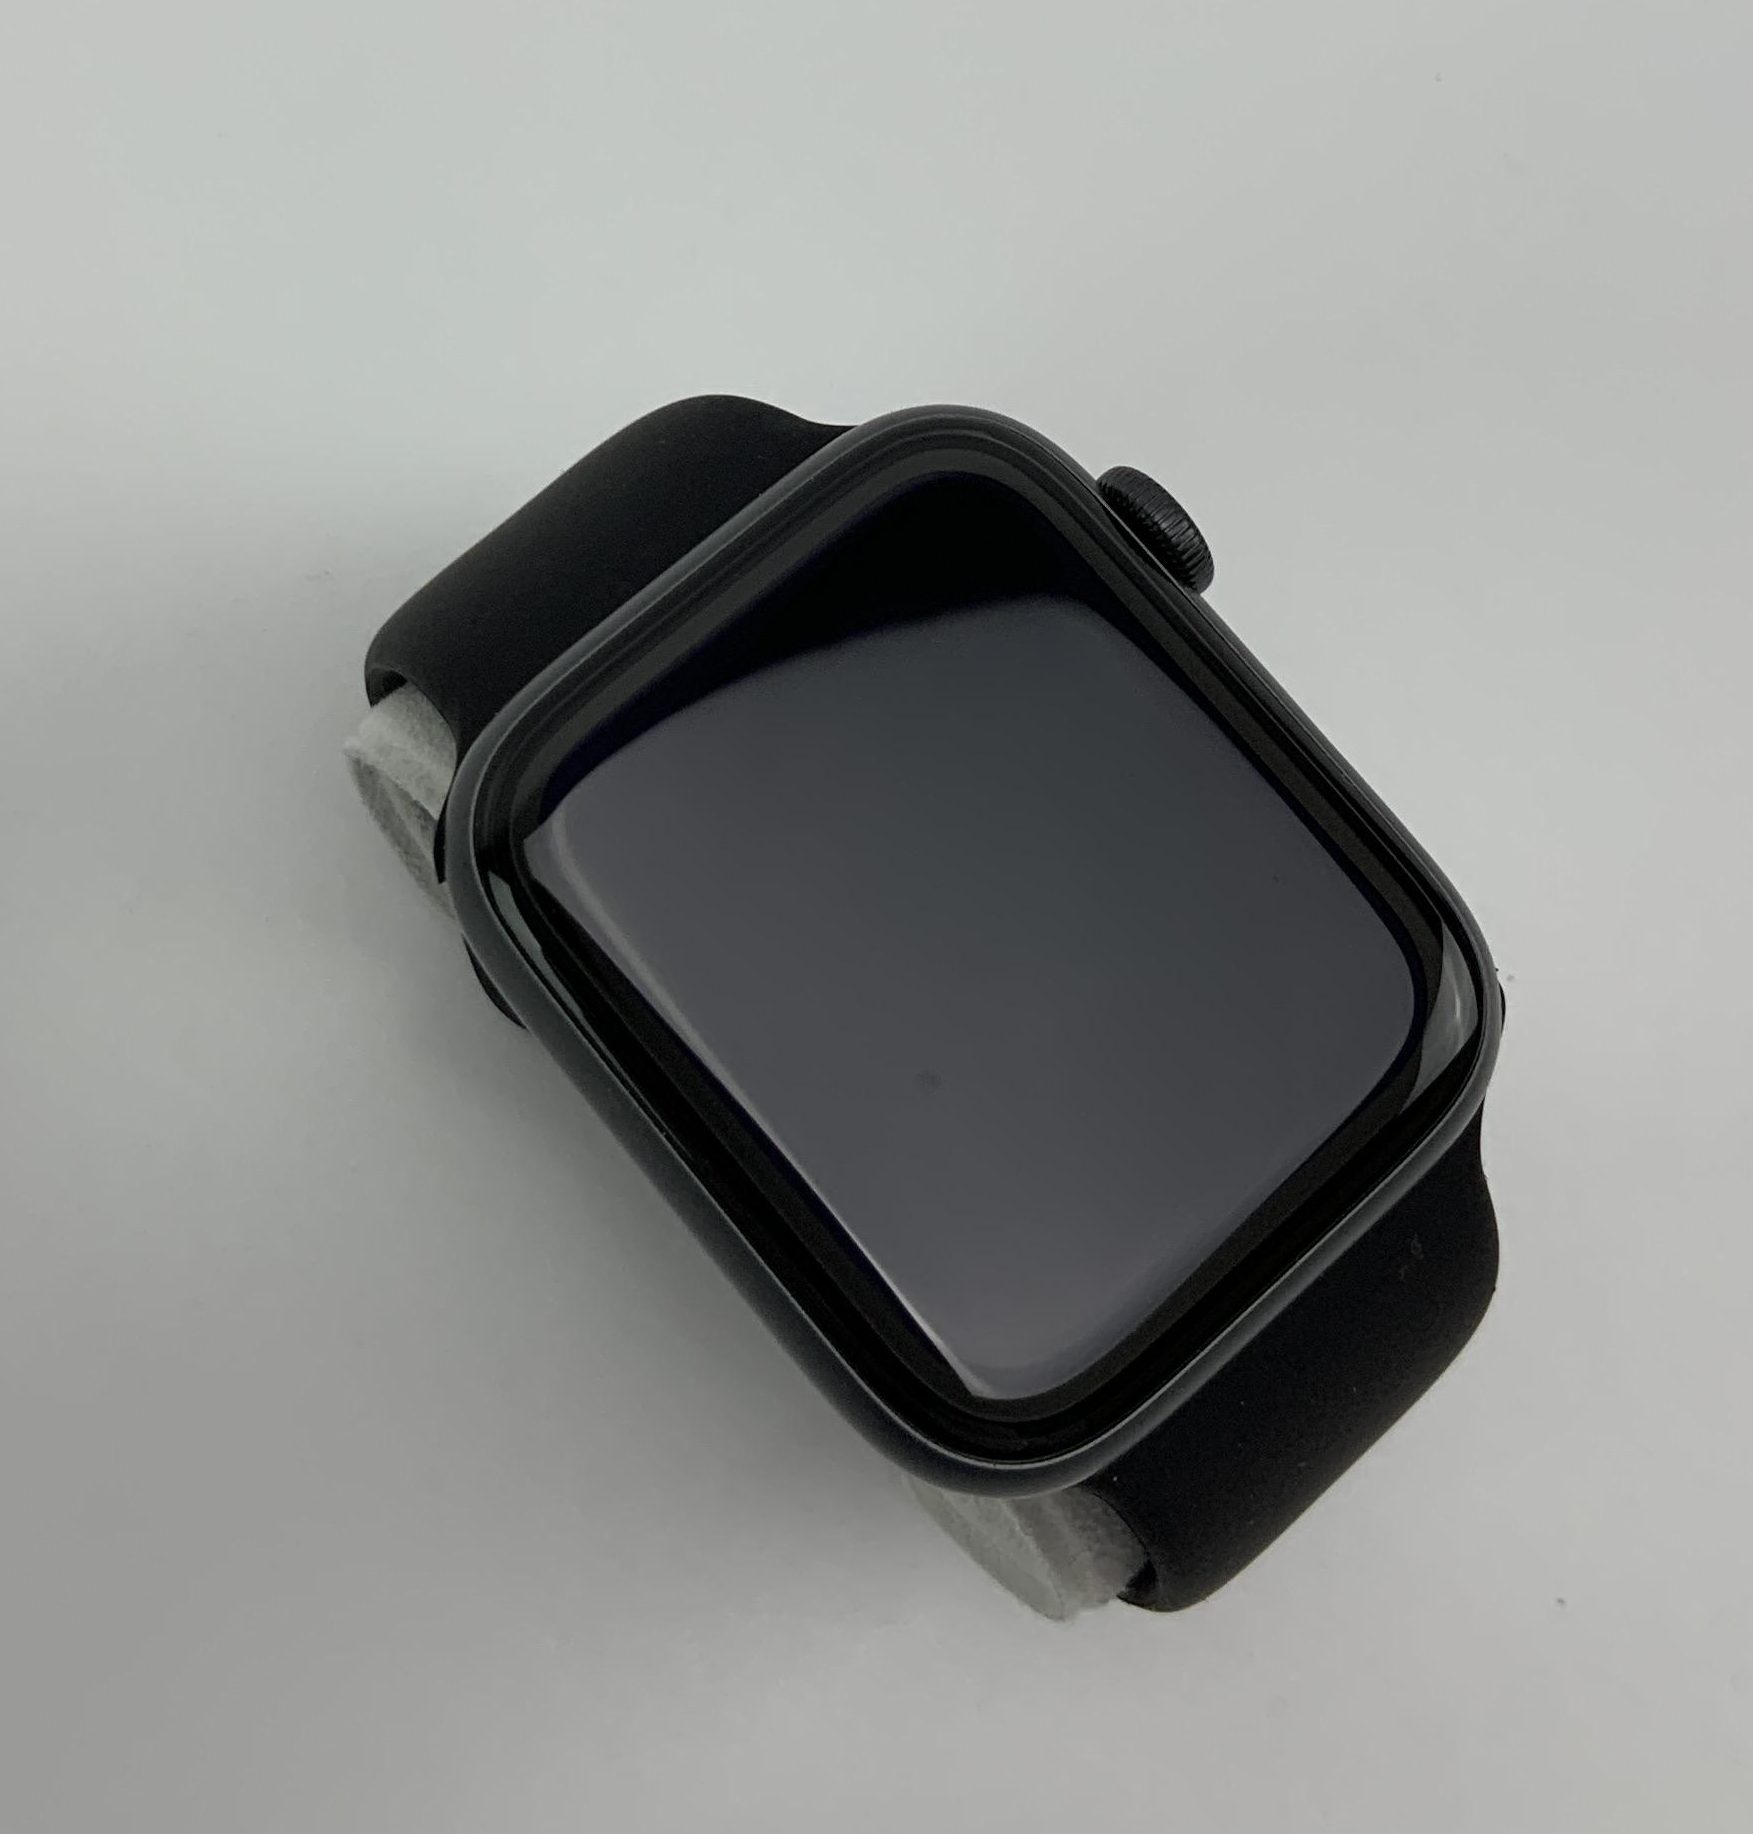 Watch Series 5 Aluminum Cellular (44mm), Space Gray, imagen 3